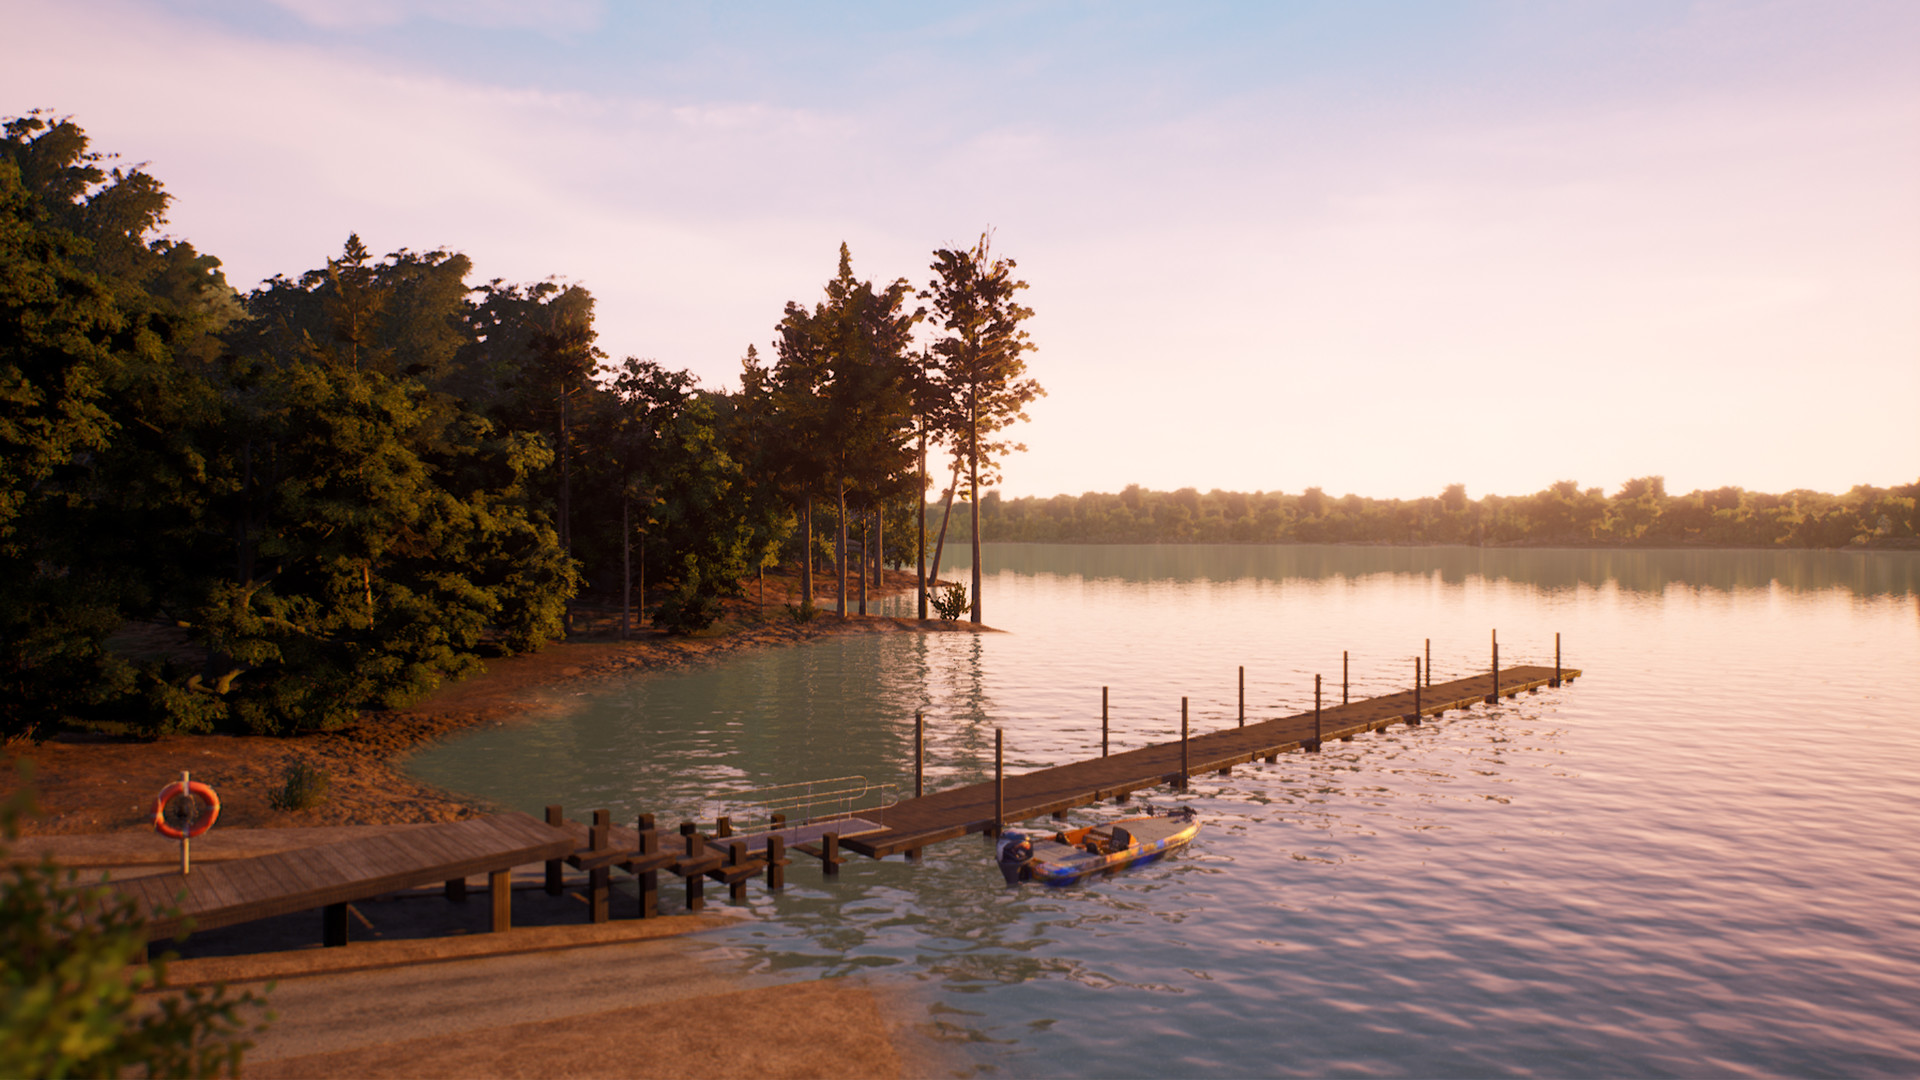 Bassmaster Fishing 2022 - Jordan Lake DLC Steam CD Key